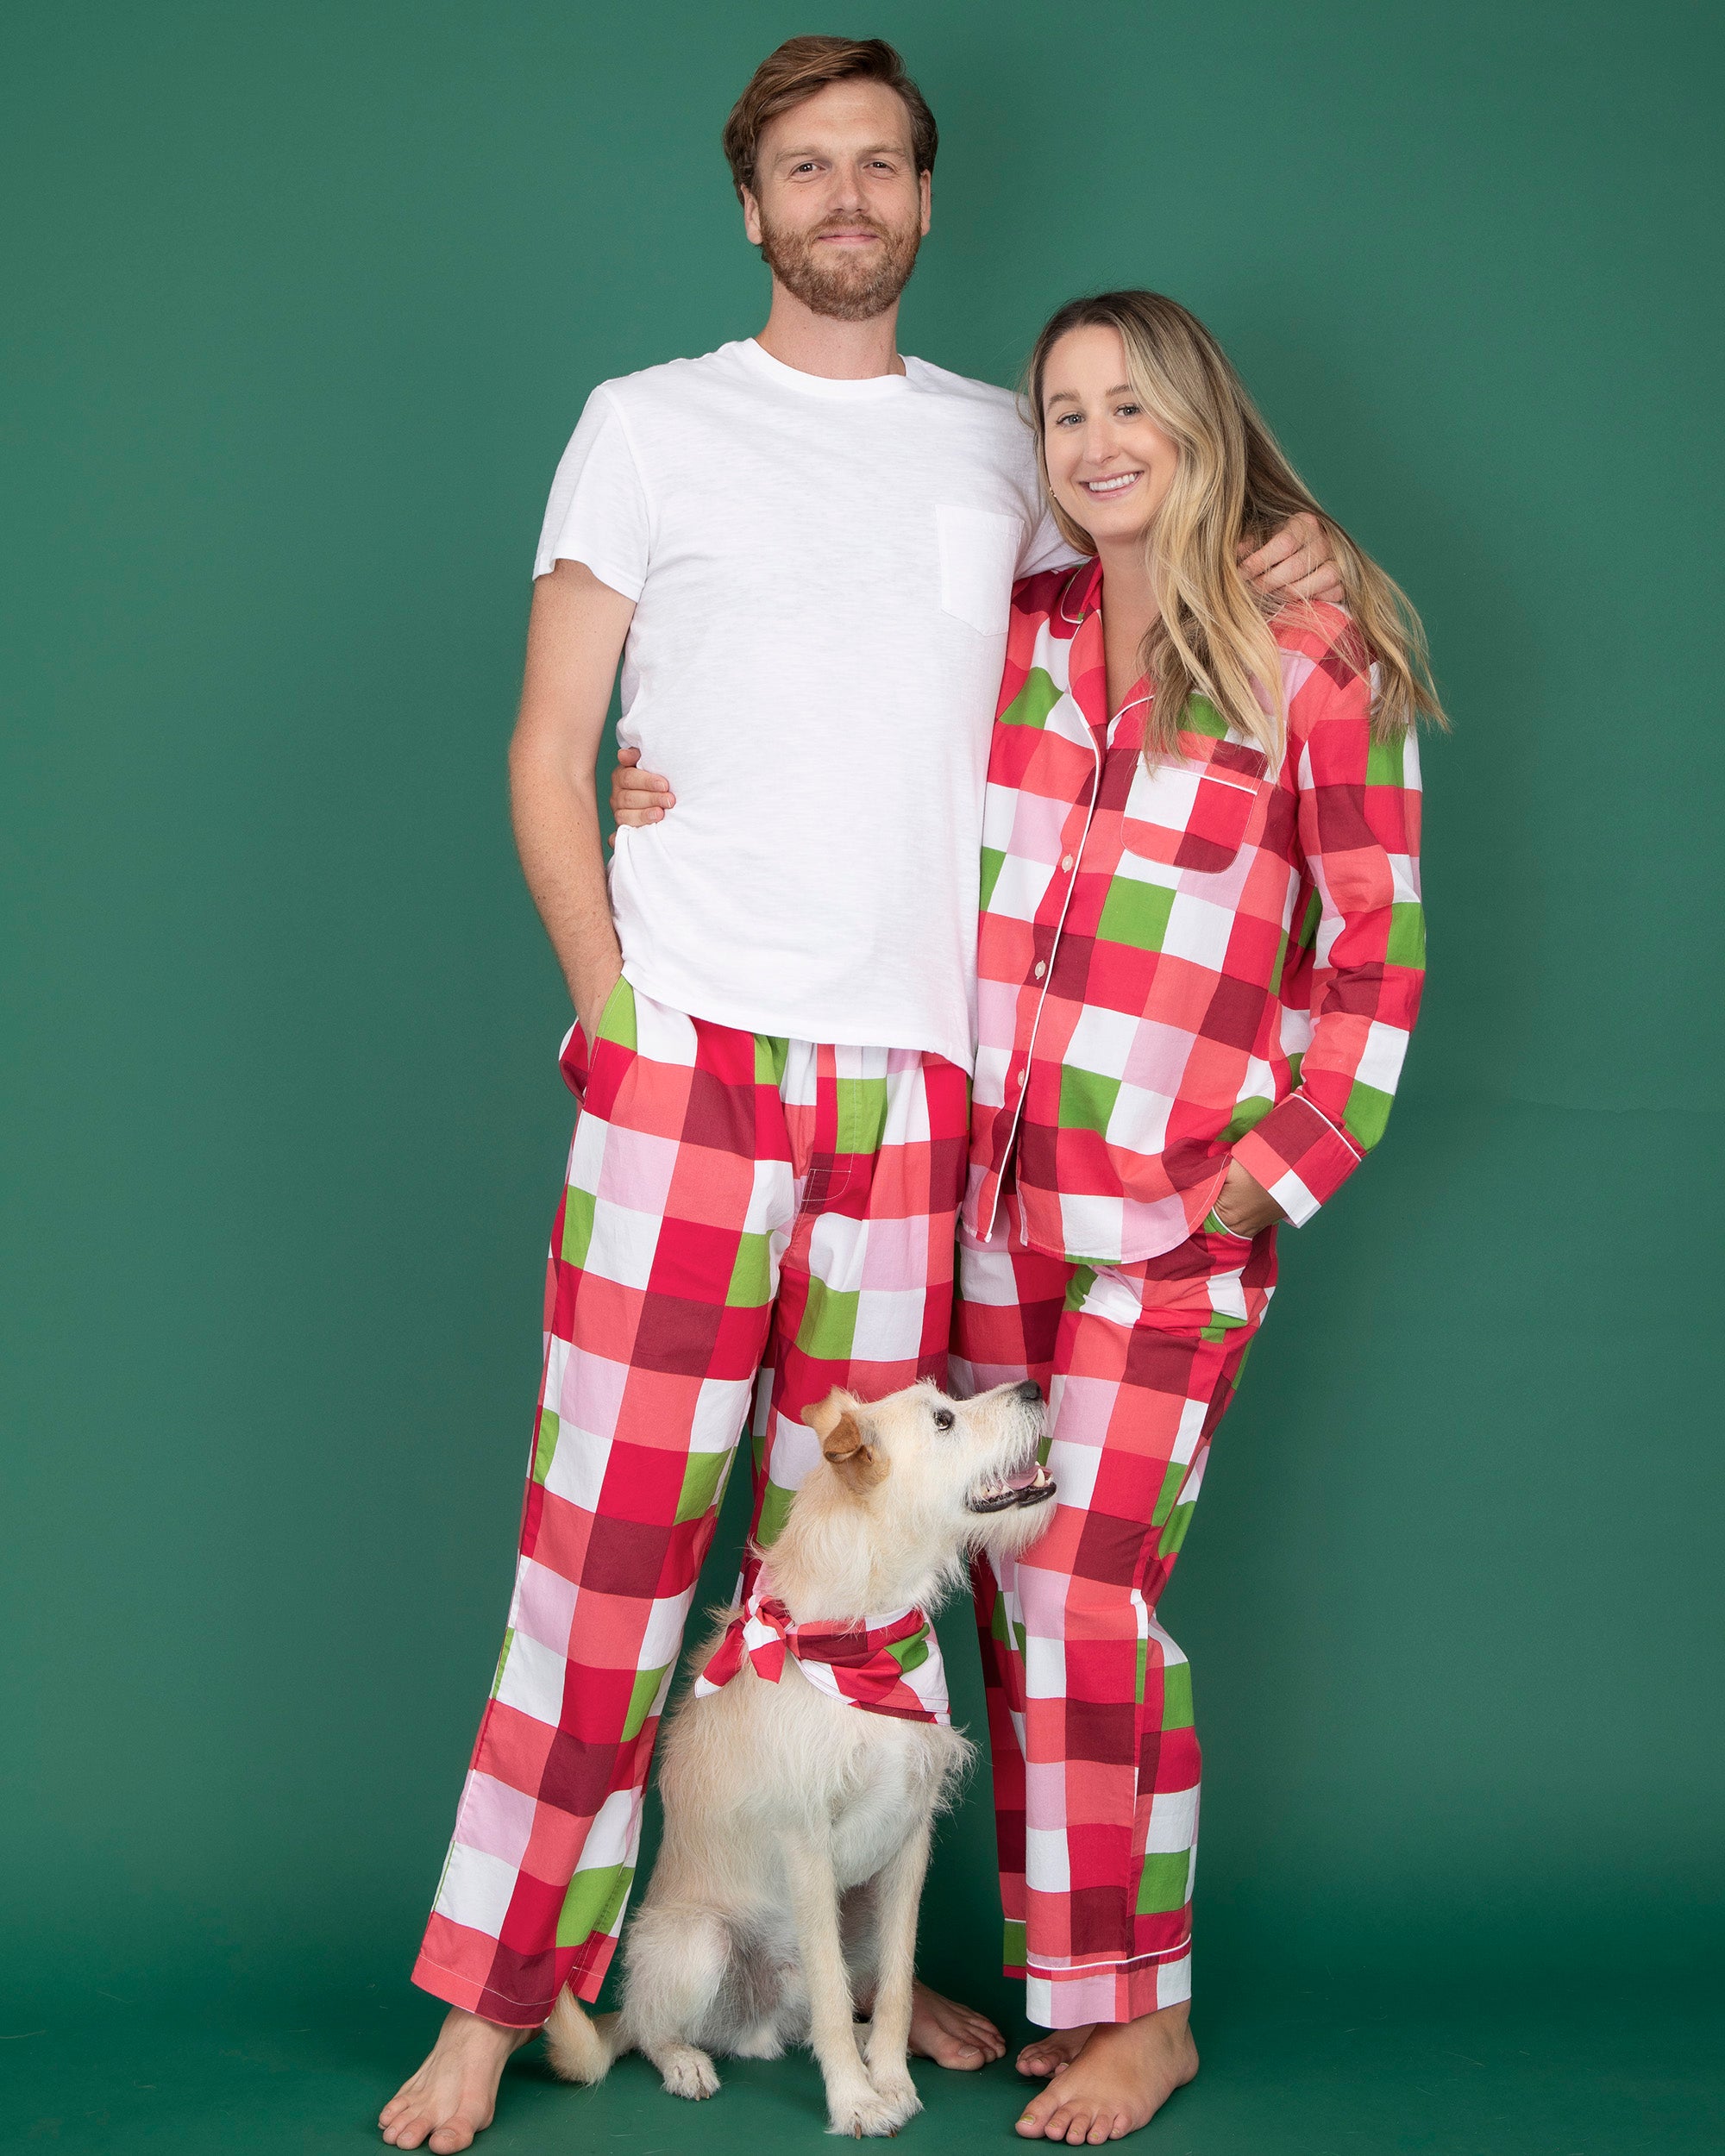 Couples Matching Cotton Poplin Pajama Sets